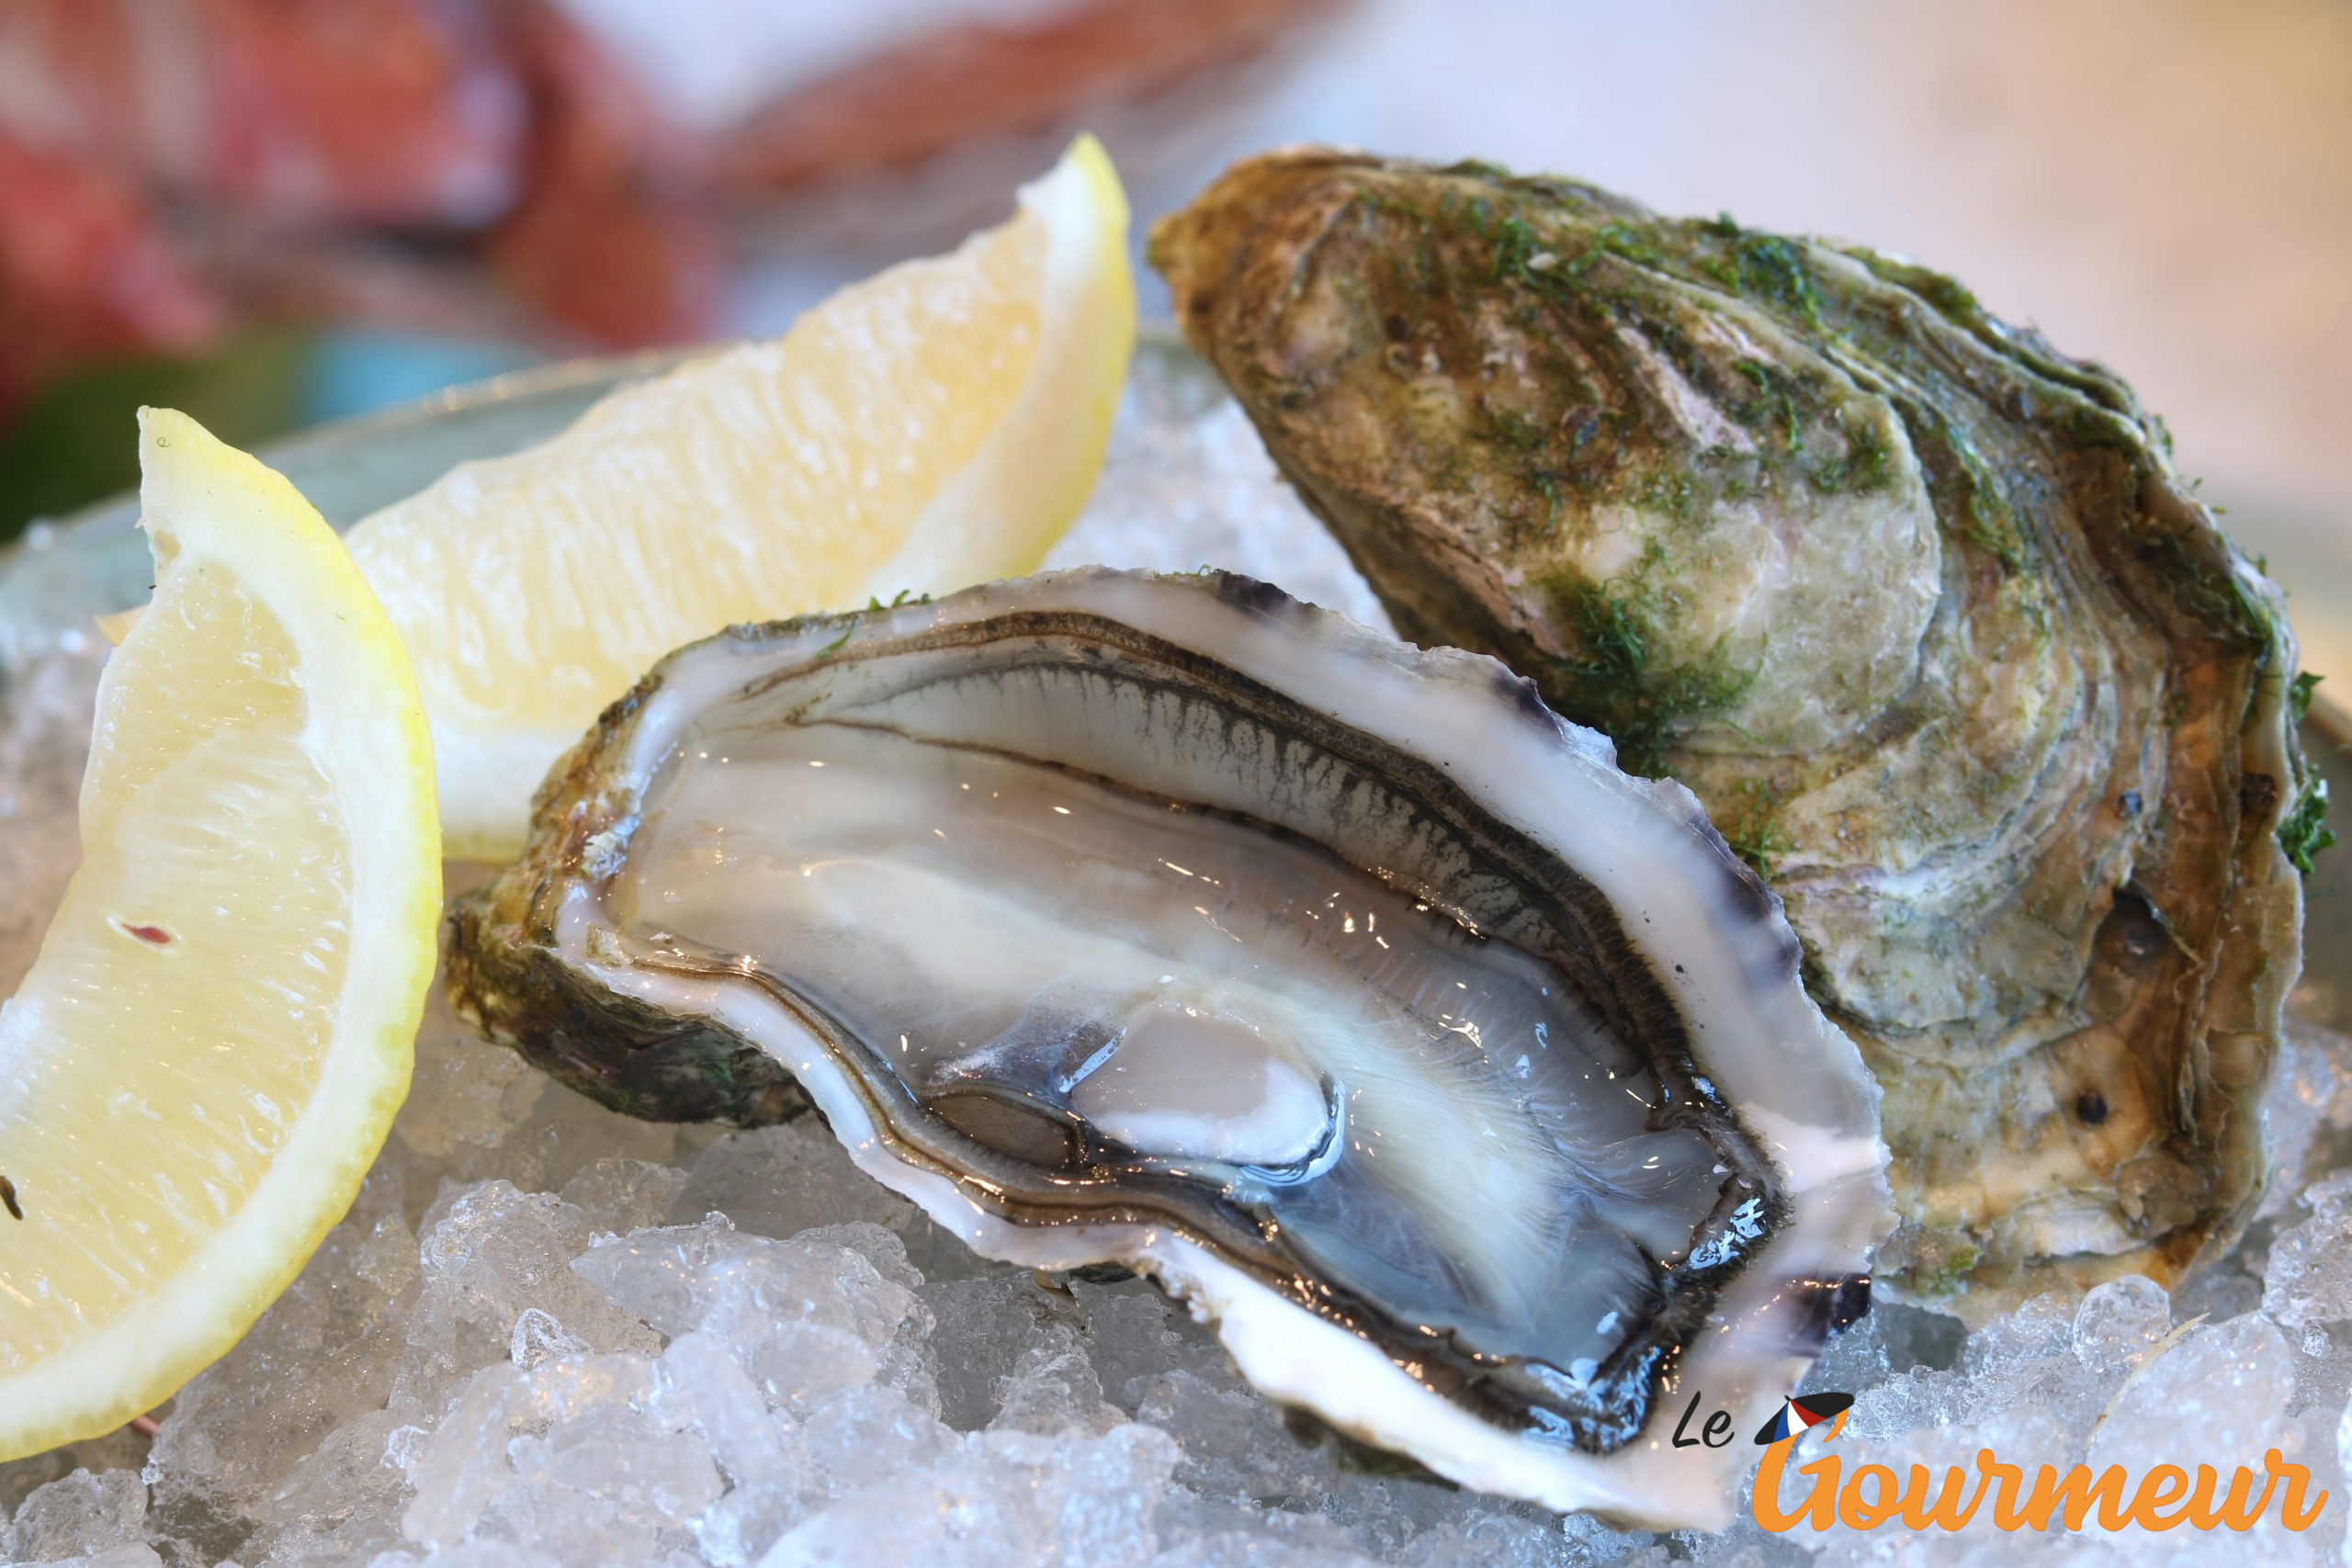 Fruits de mer et huîtres de Charente Maritime